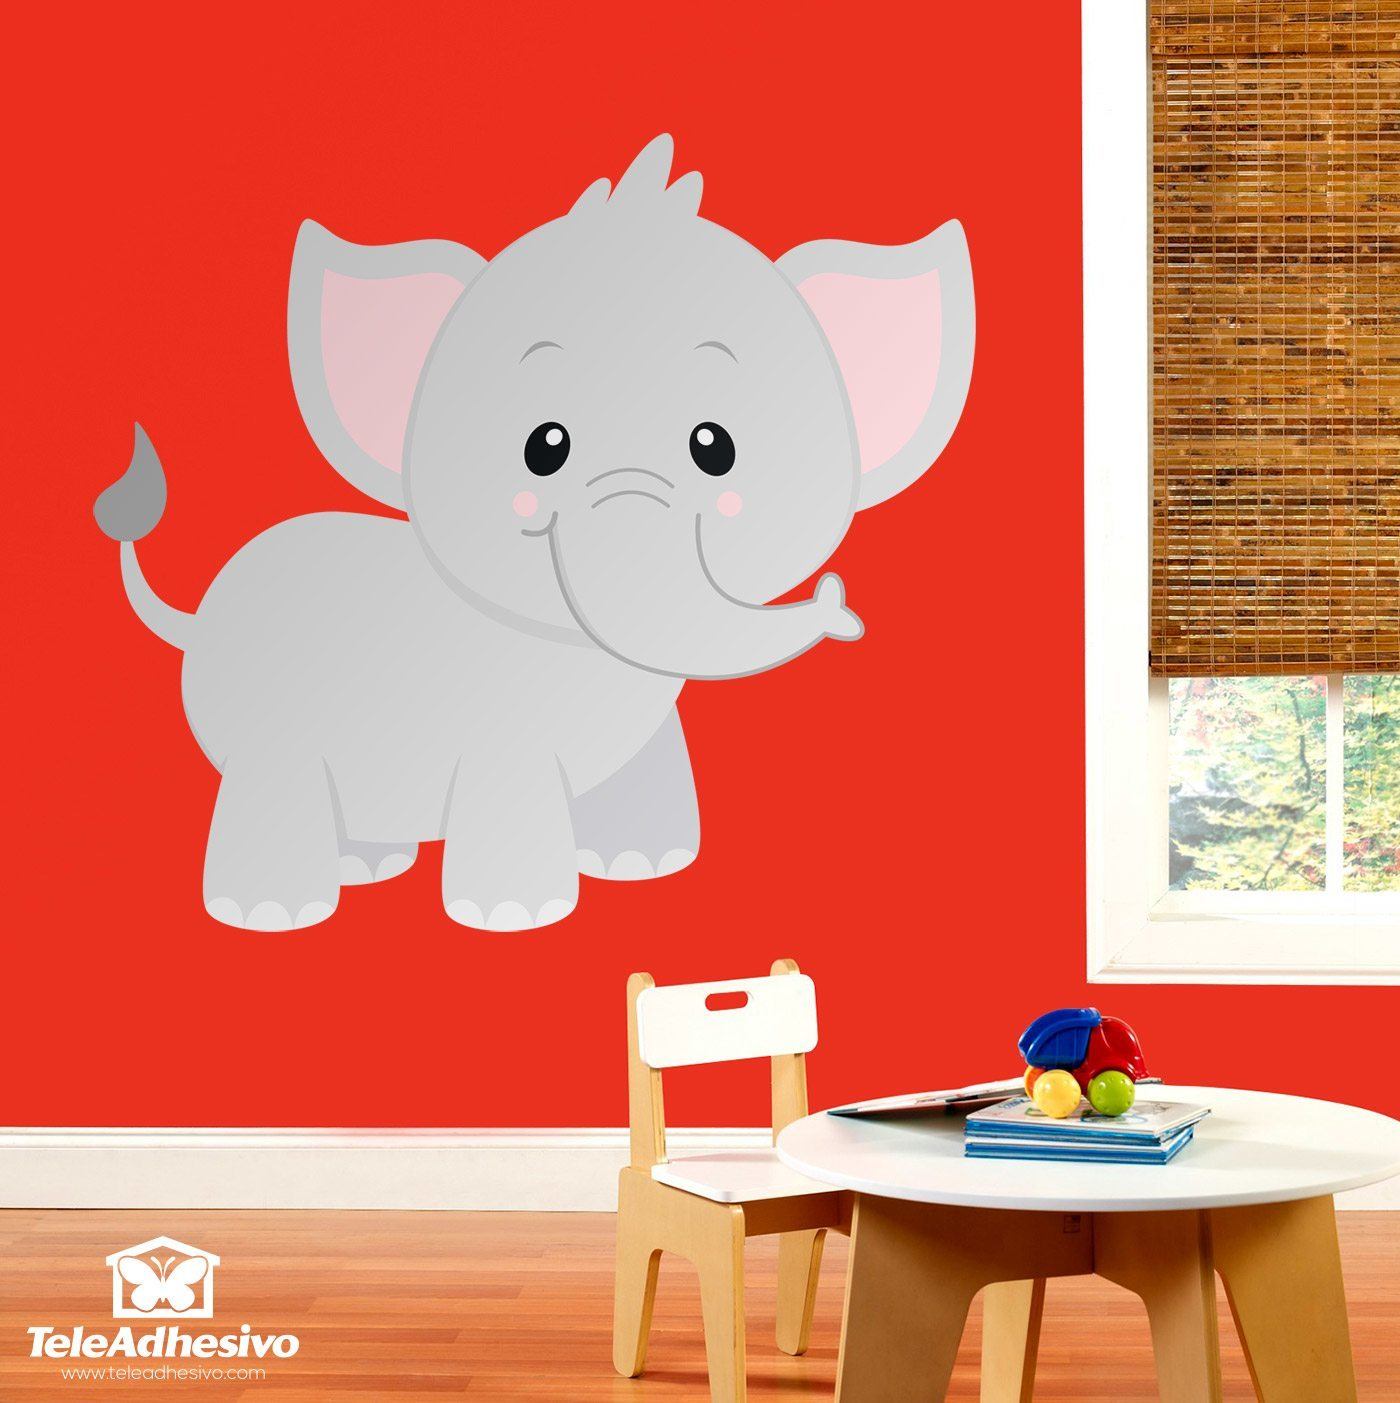 Stickers for Kids: Happy elephant